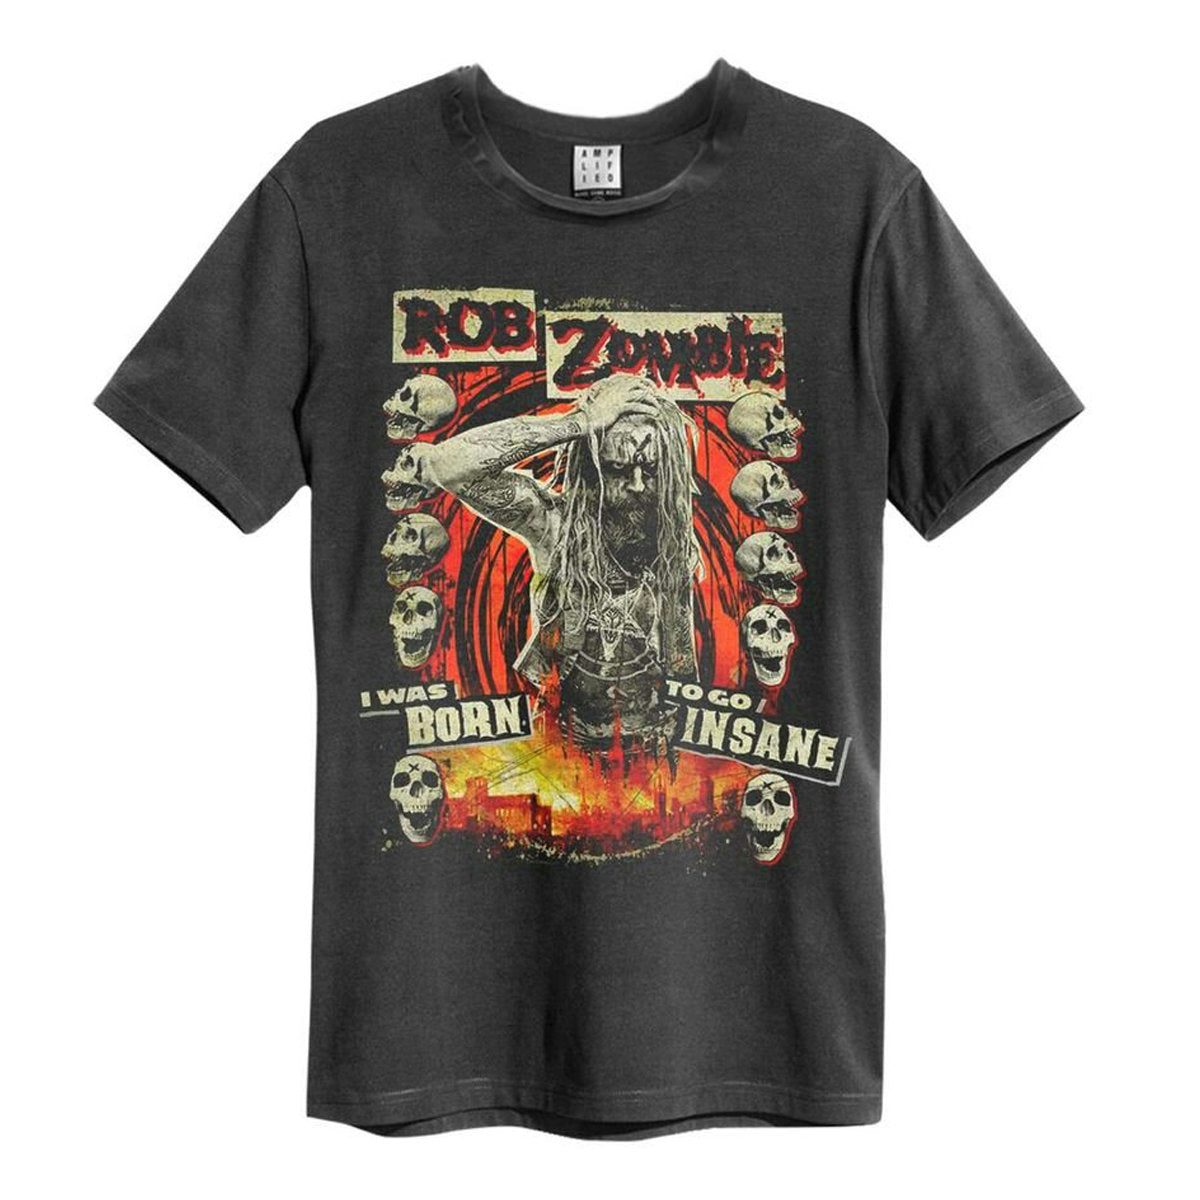 Rob Zombie T Shirt - Born Insane Amplified Vintage $35.84